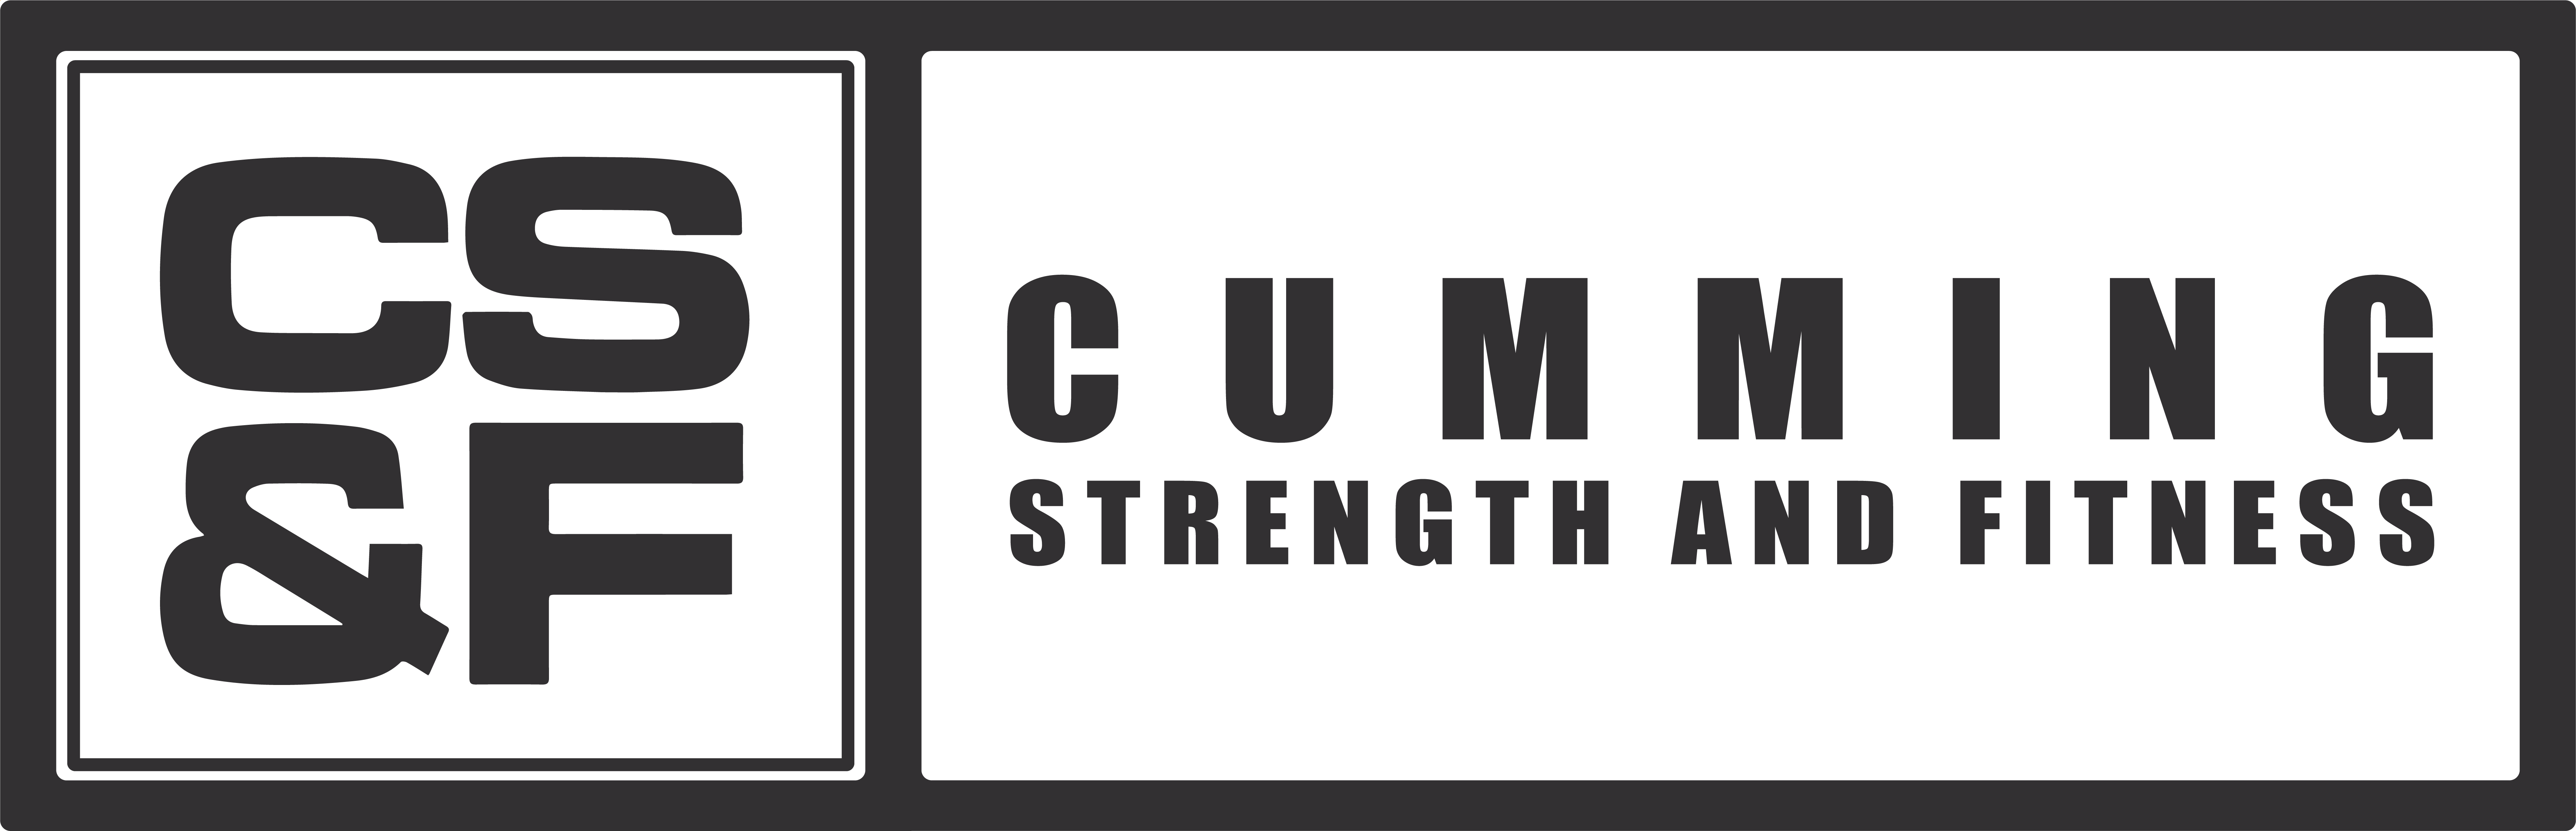 Cumming Strength and Fitness logo